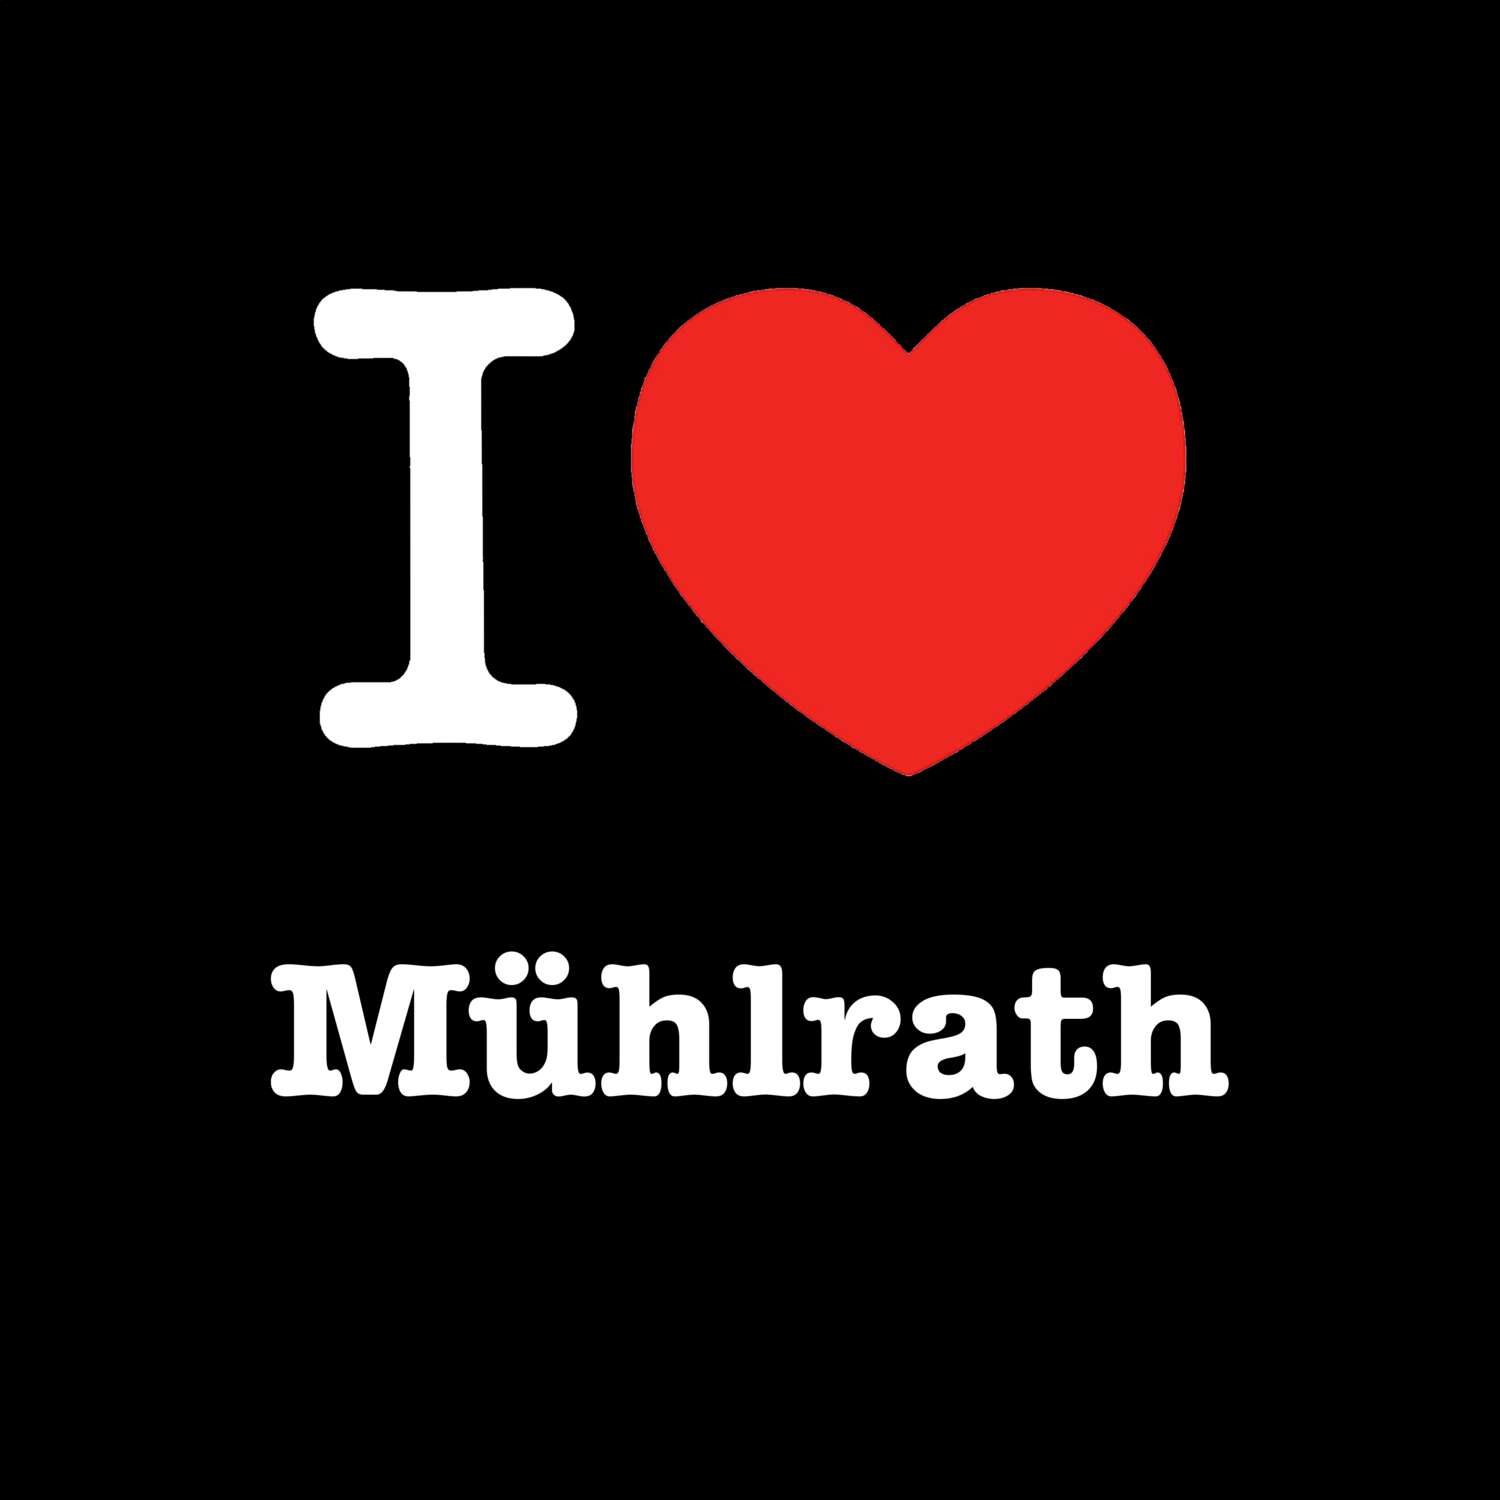 Mühlrath T-Shirt »I love«